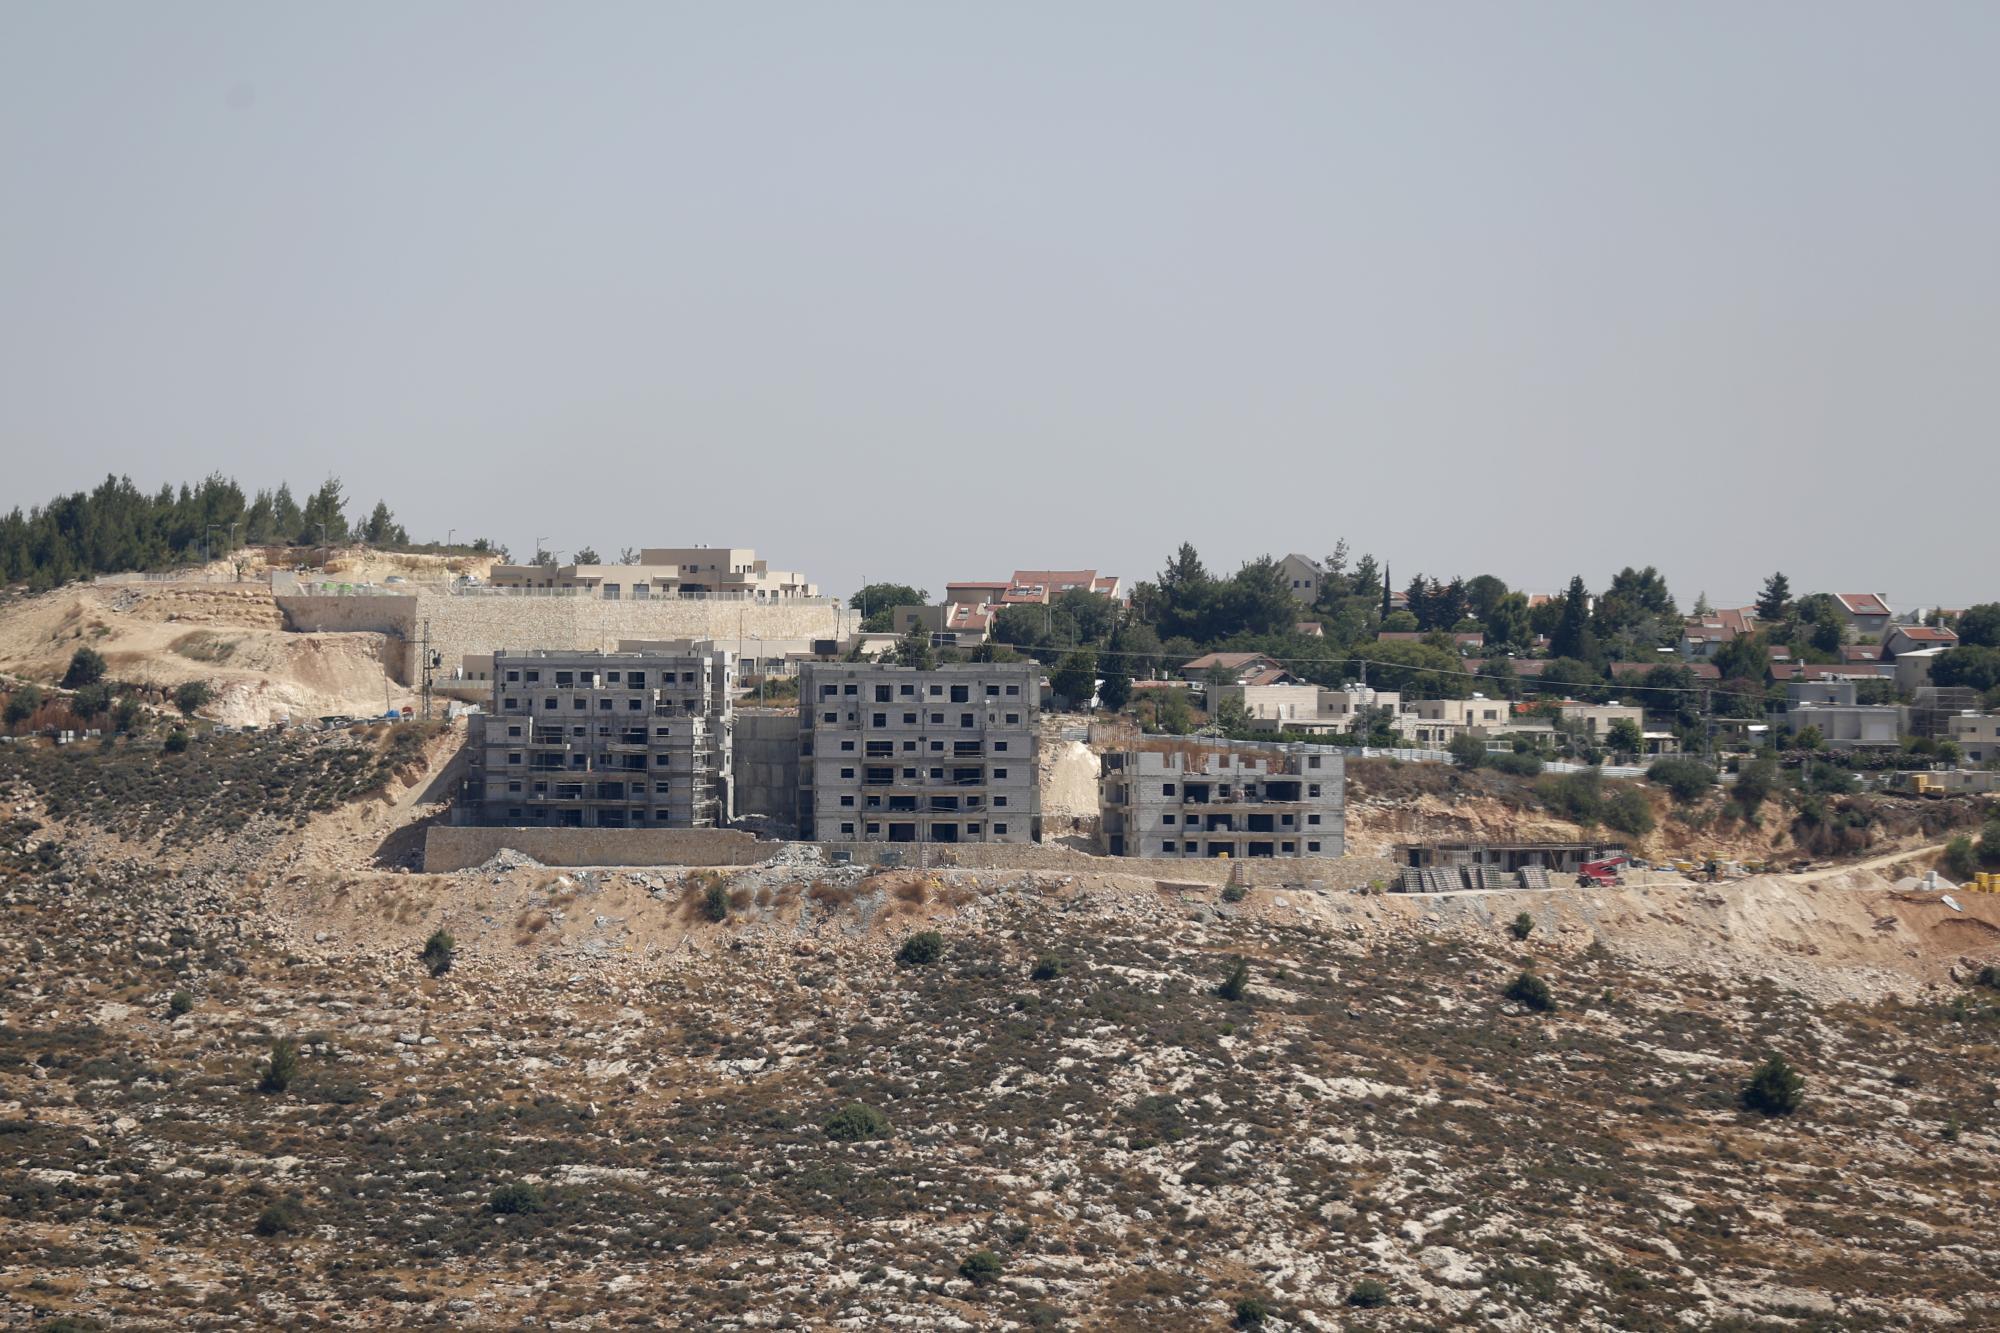 Israelische Siedler erschossen laut Berichten 19-jährigen Palästinenser